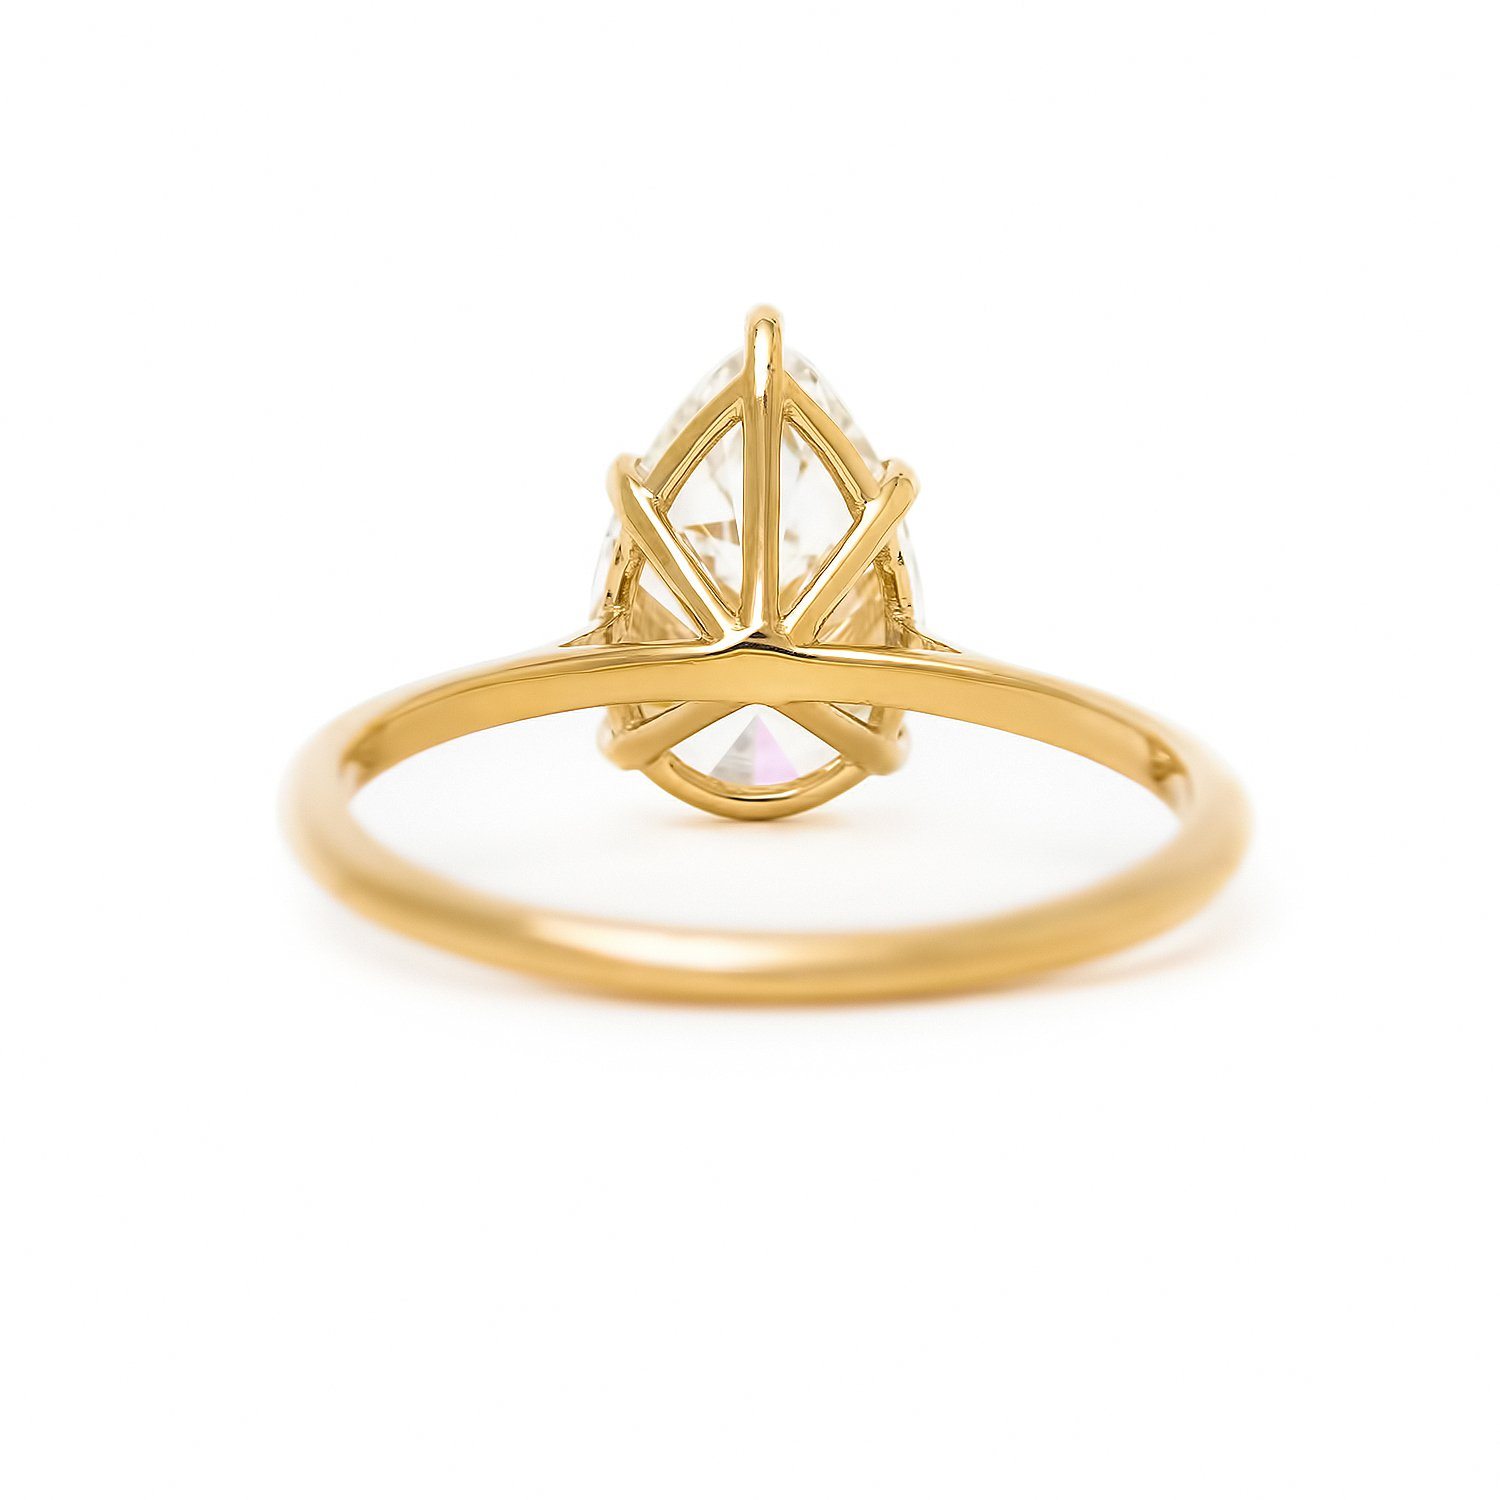 Diamond solitaire unique engagement ring